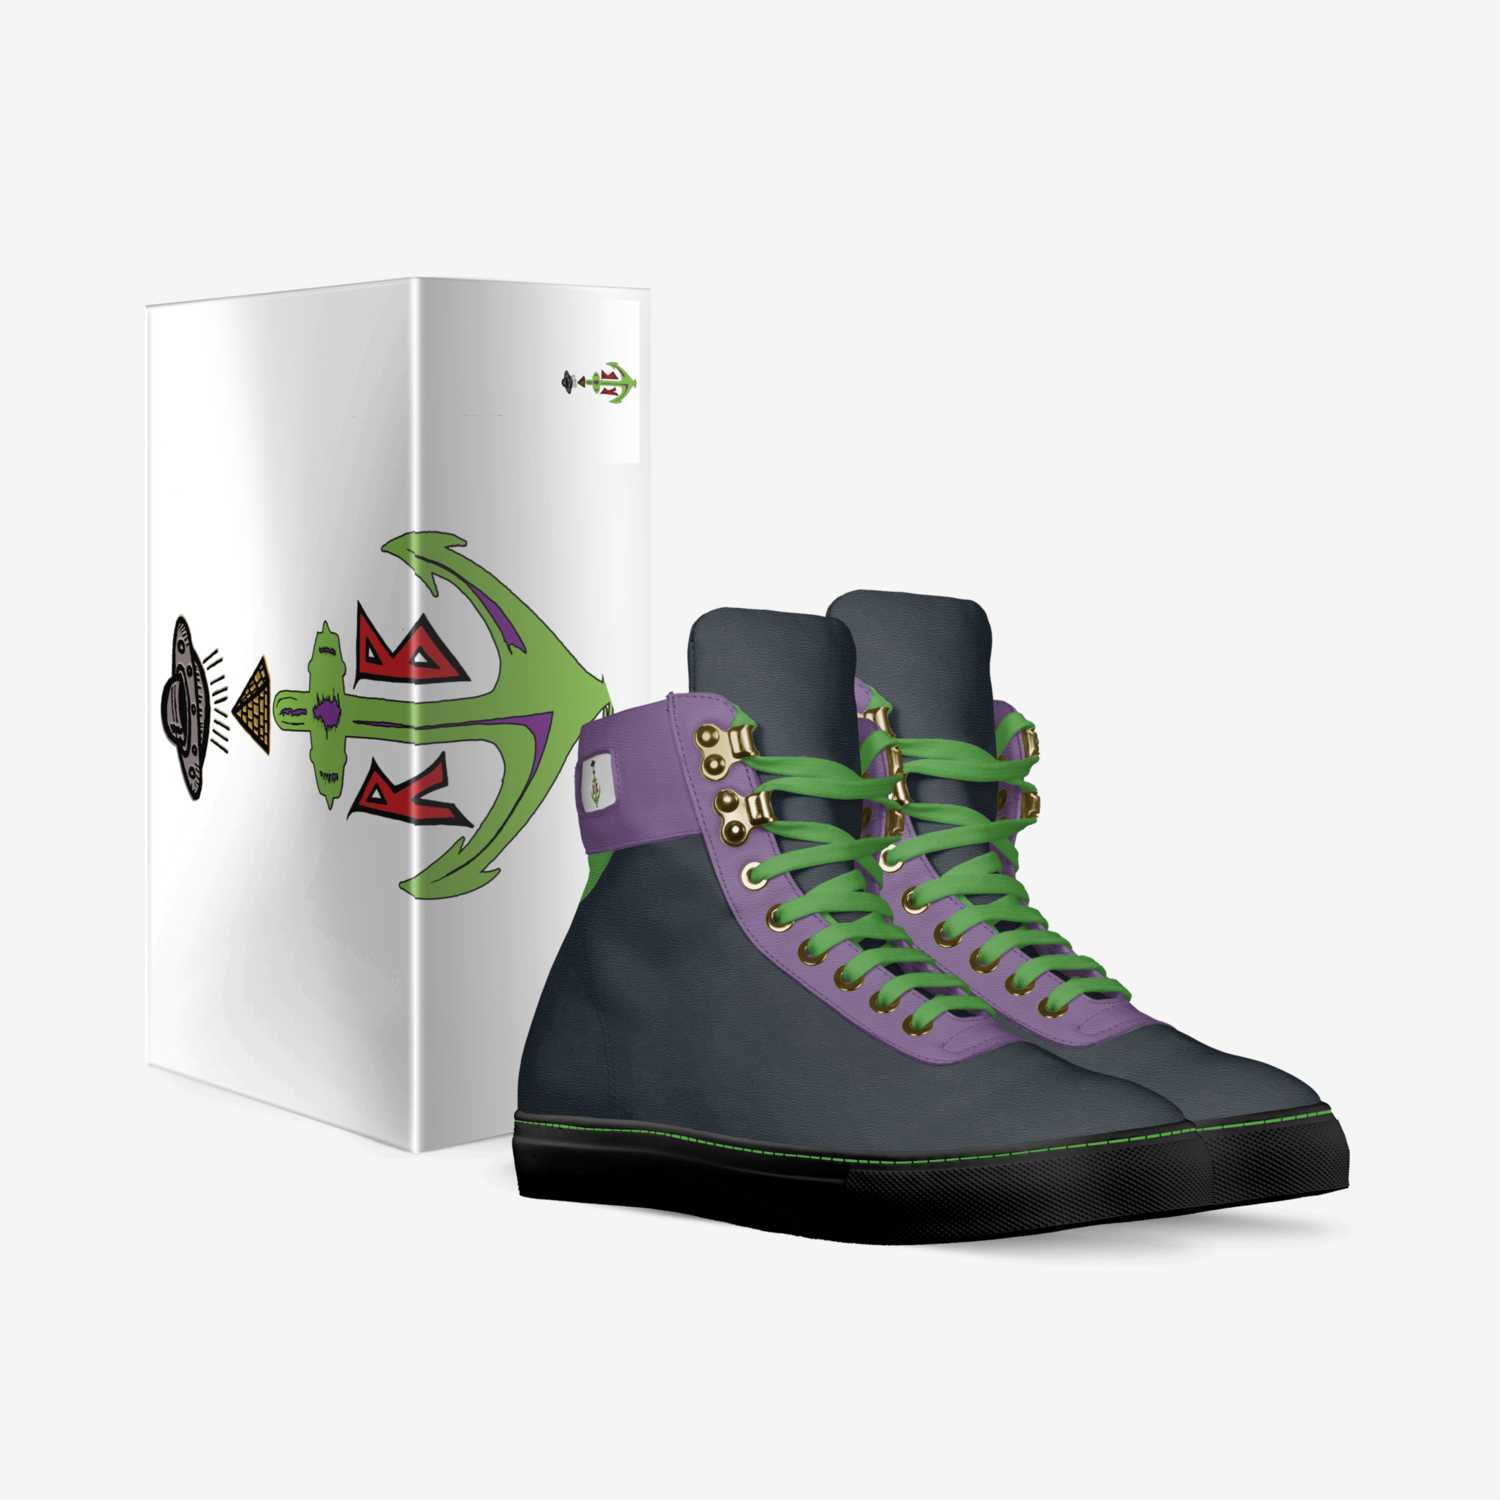 Galaxseaz custom made in Italy shoes by Charles Jordan Jr | Box view